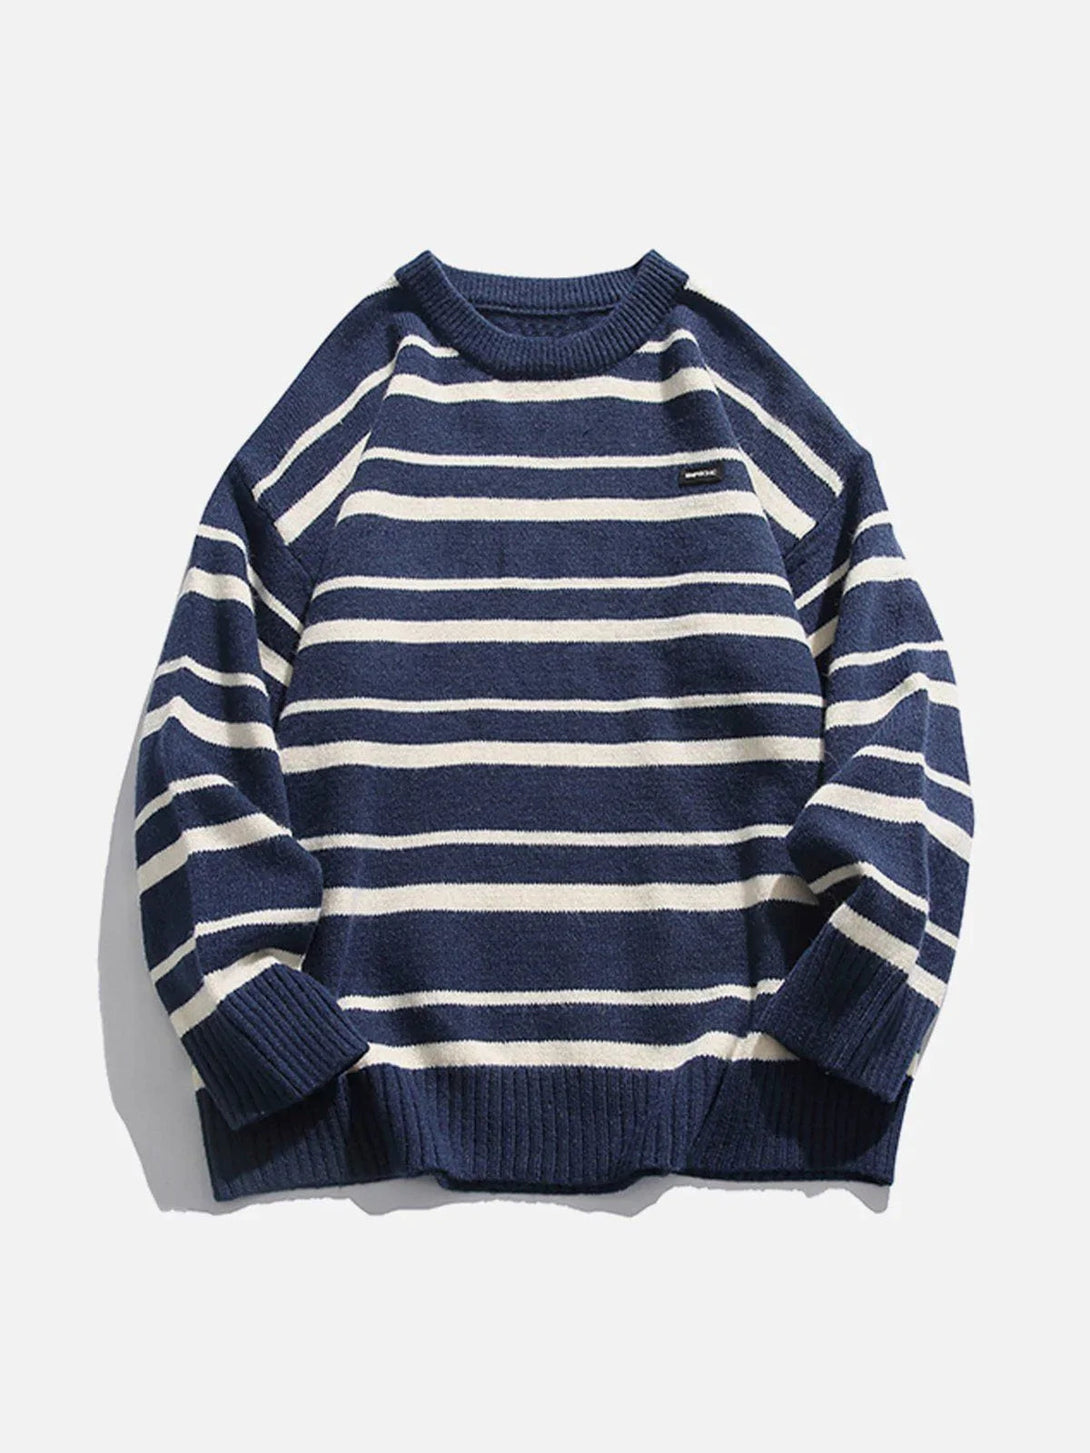 Majesda® - Vintage Stripe Patchwork Sweater outfit ideas streetwear fashion